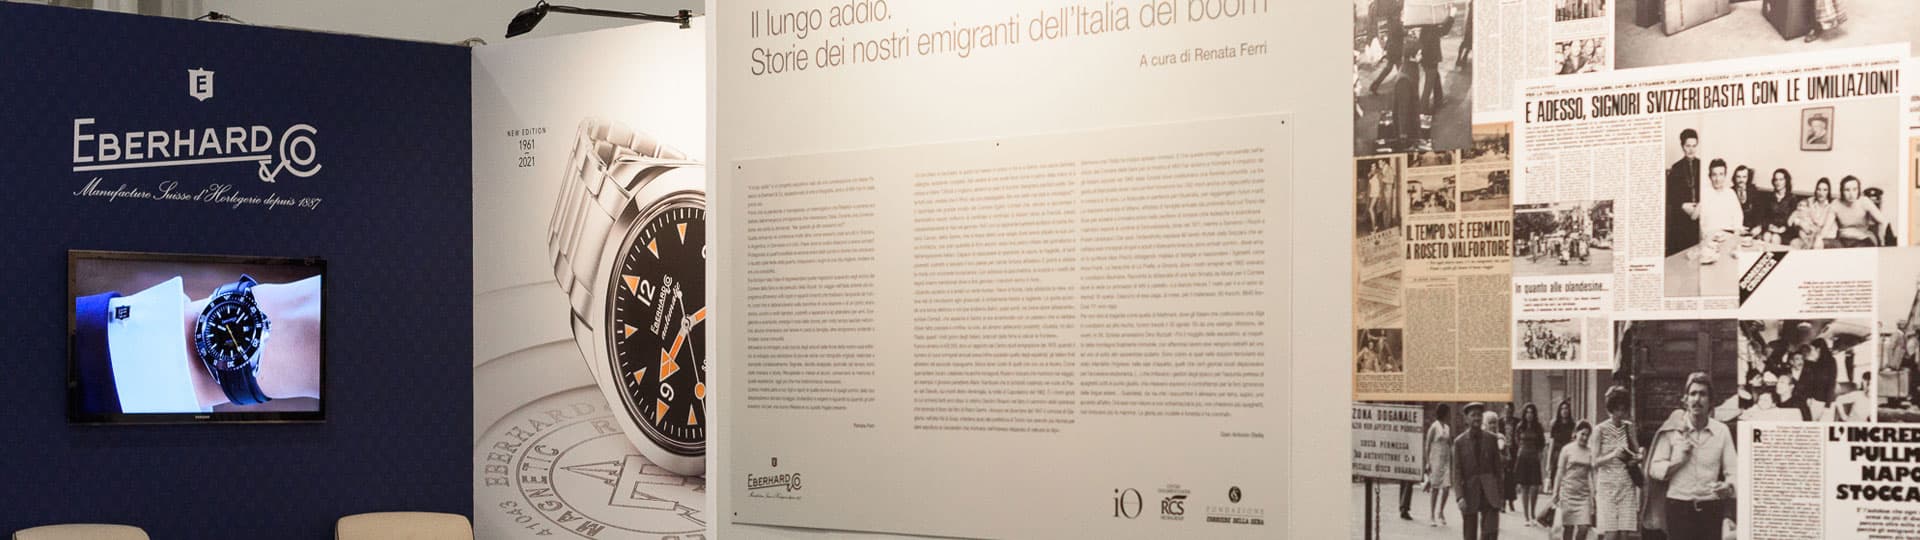 MIA — Milan Image Art Fair